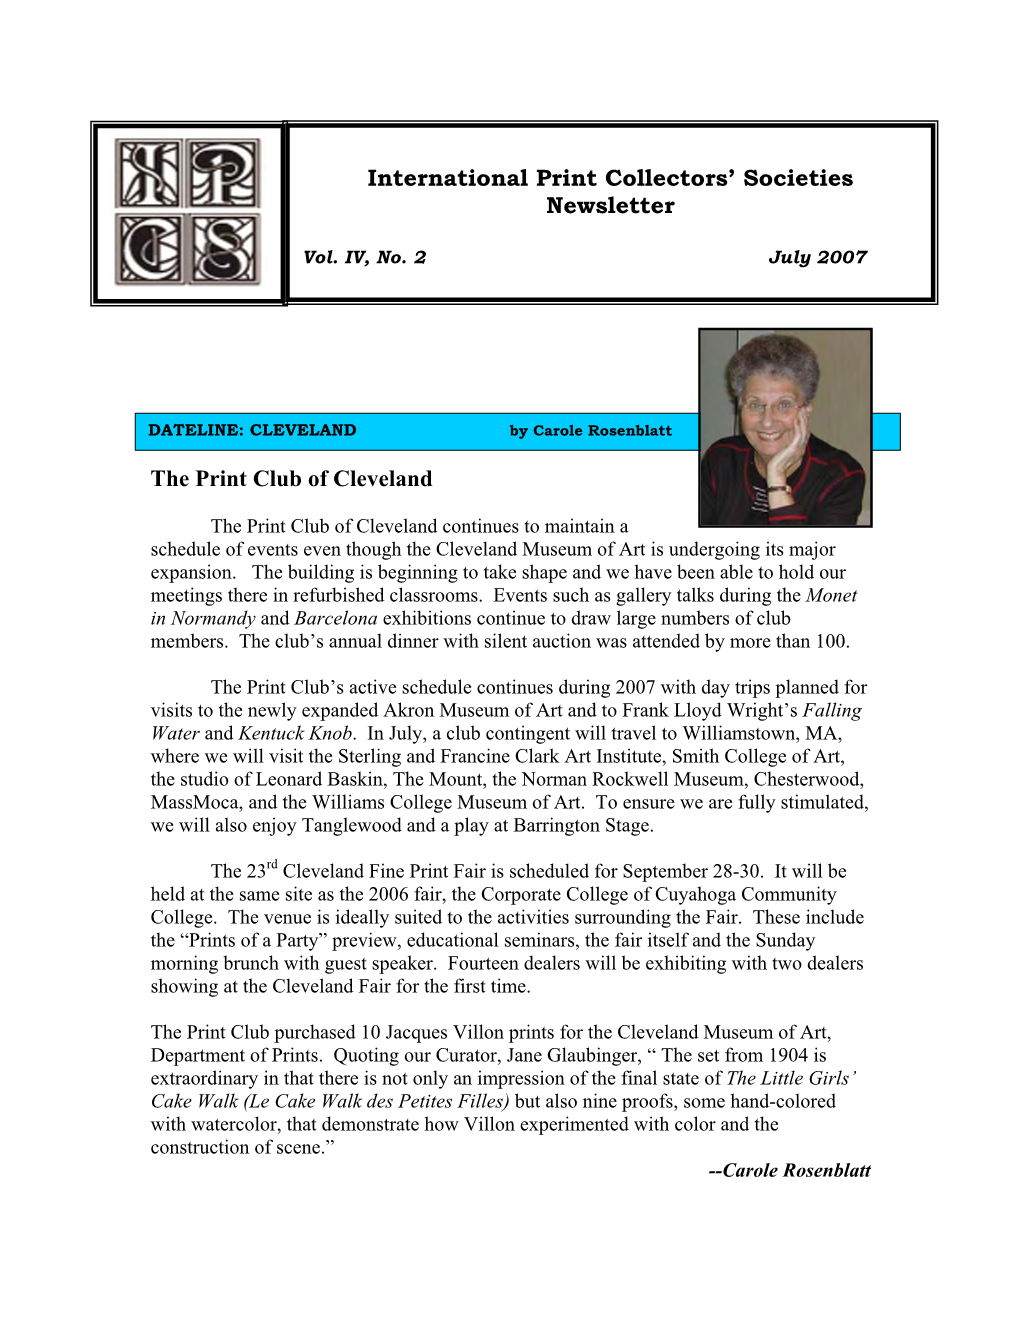 IPCS Newsletter July 2007 Read Only